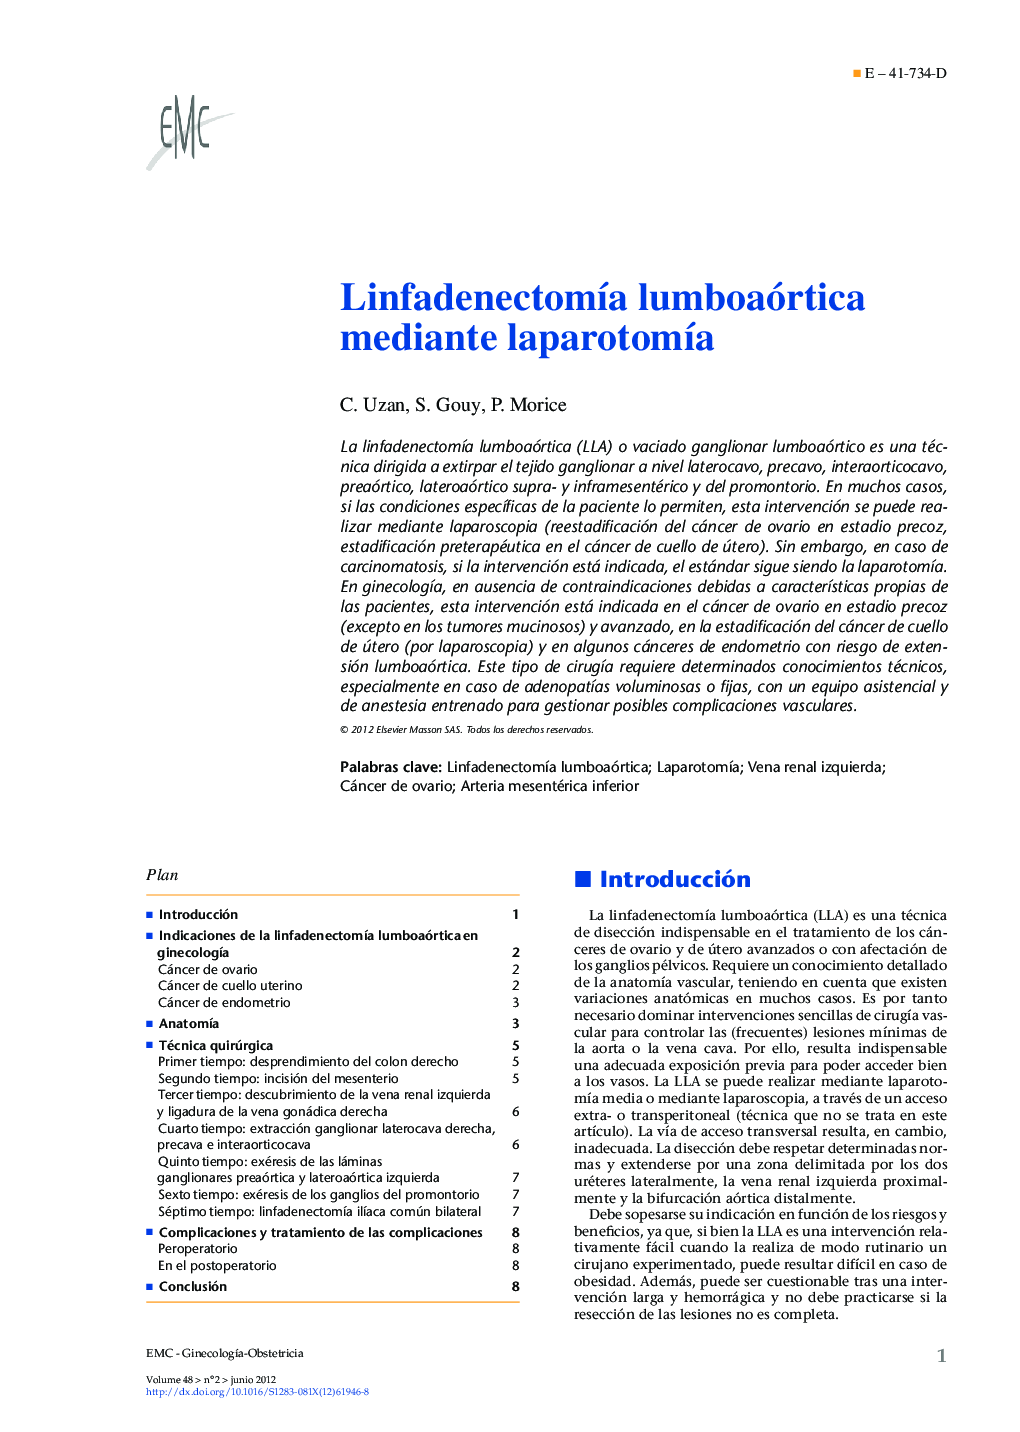 LinfadenectomÃ­a lumboaórtica mediante laparotomÃ­a